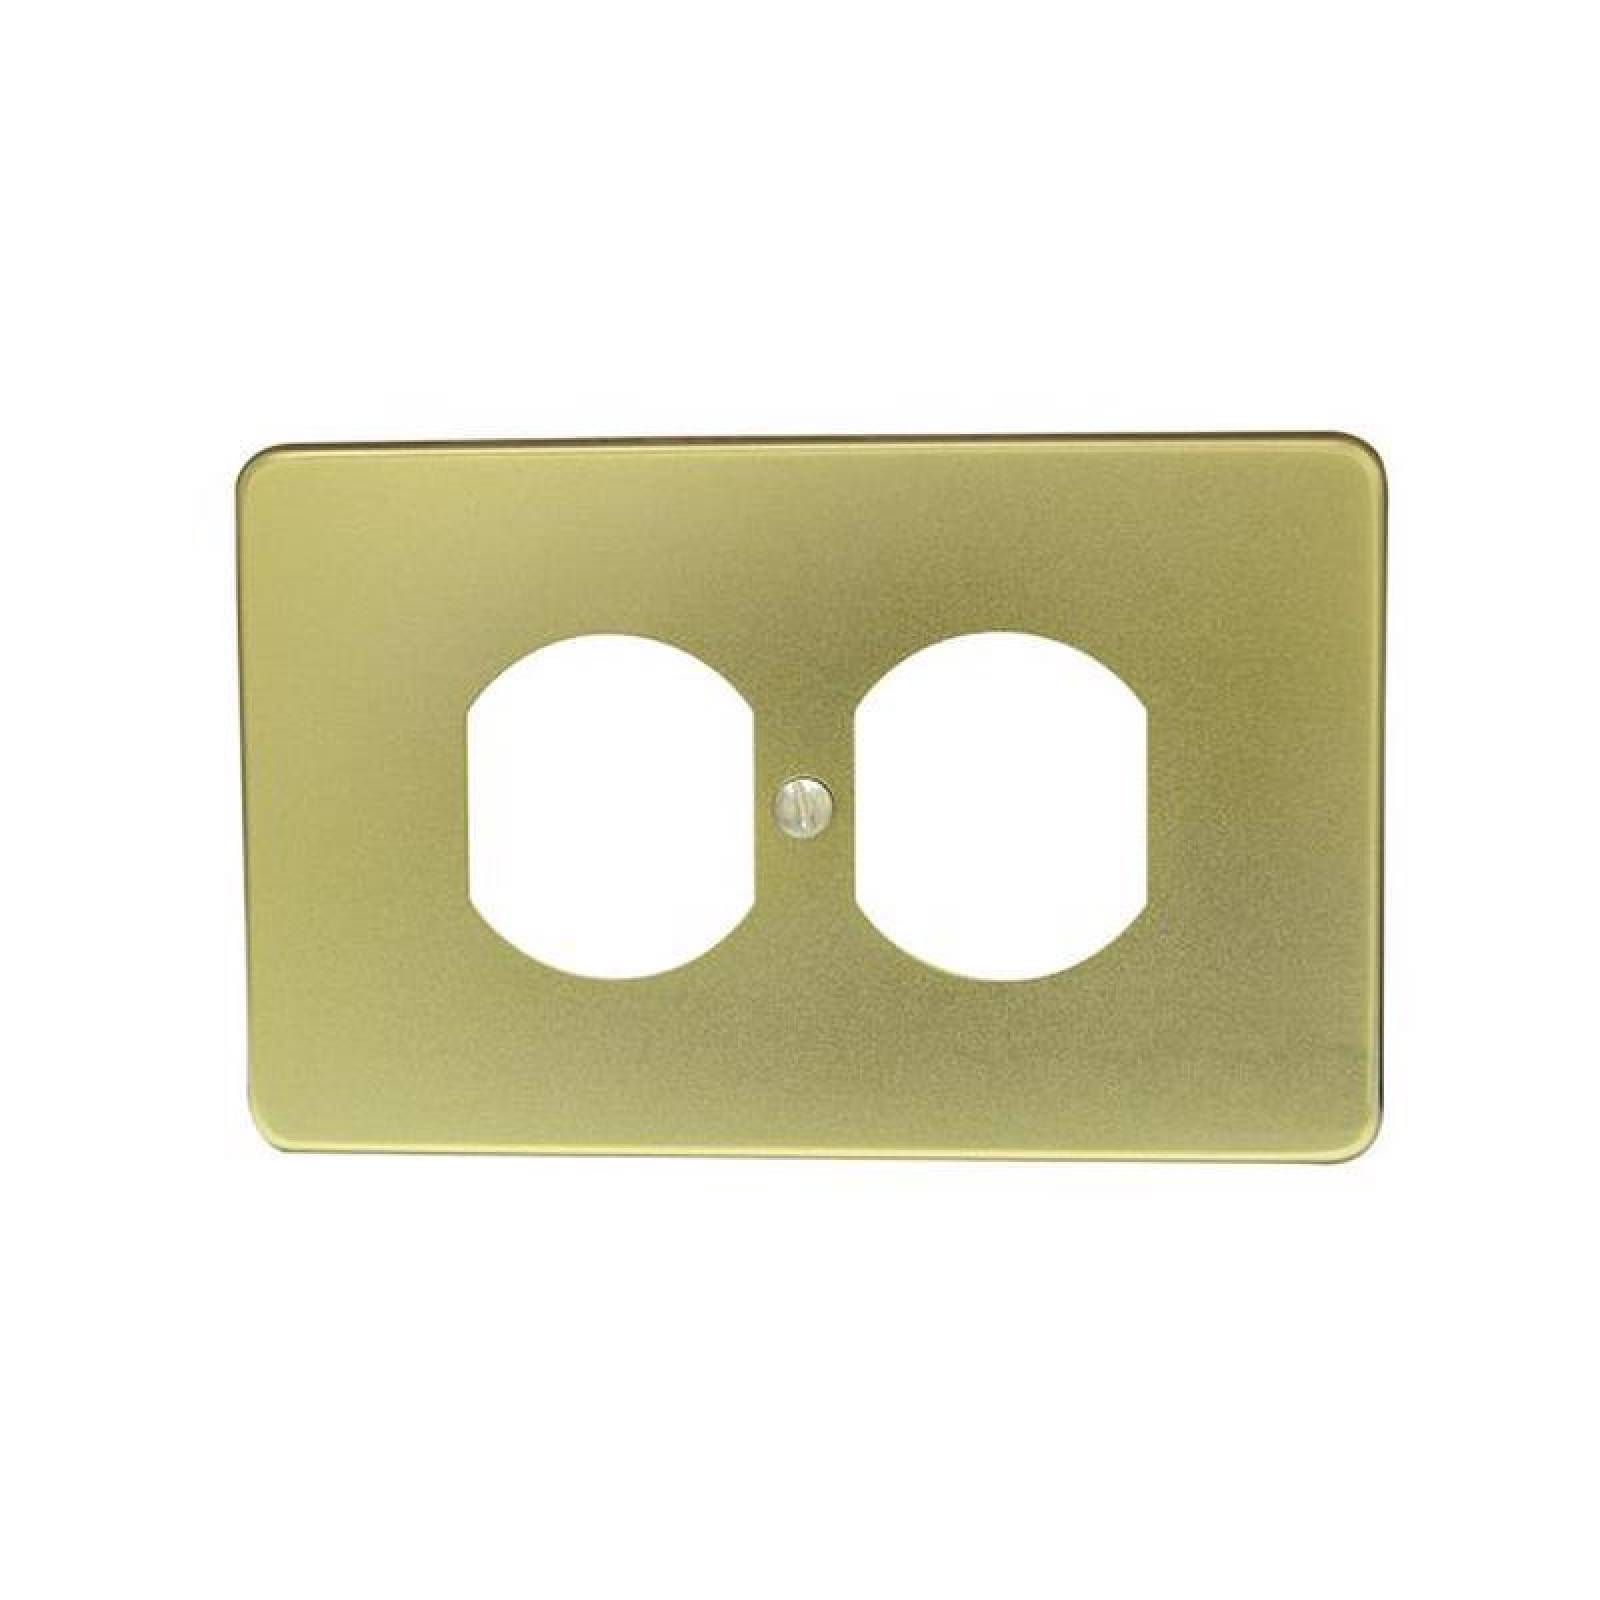 Placa de aluminio para contacto dúplex - Codigo: 136607 - Marca: Surtek 